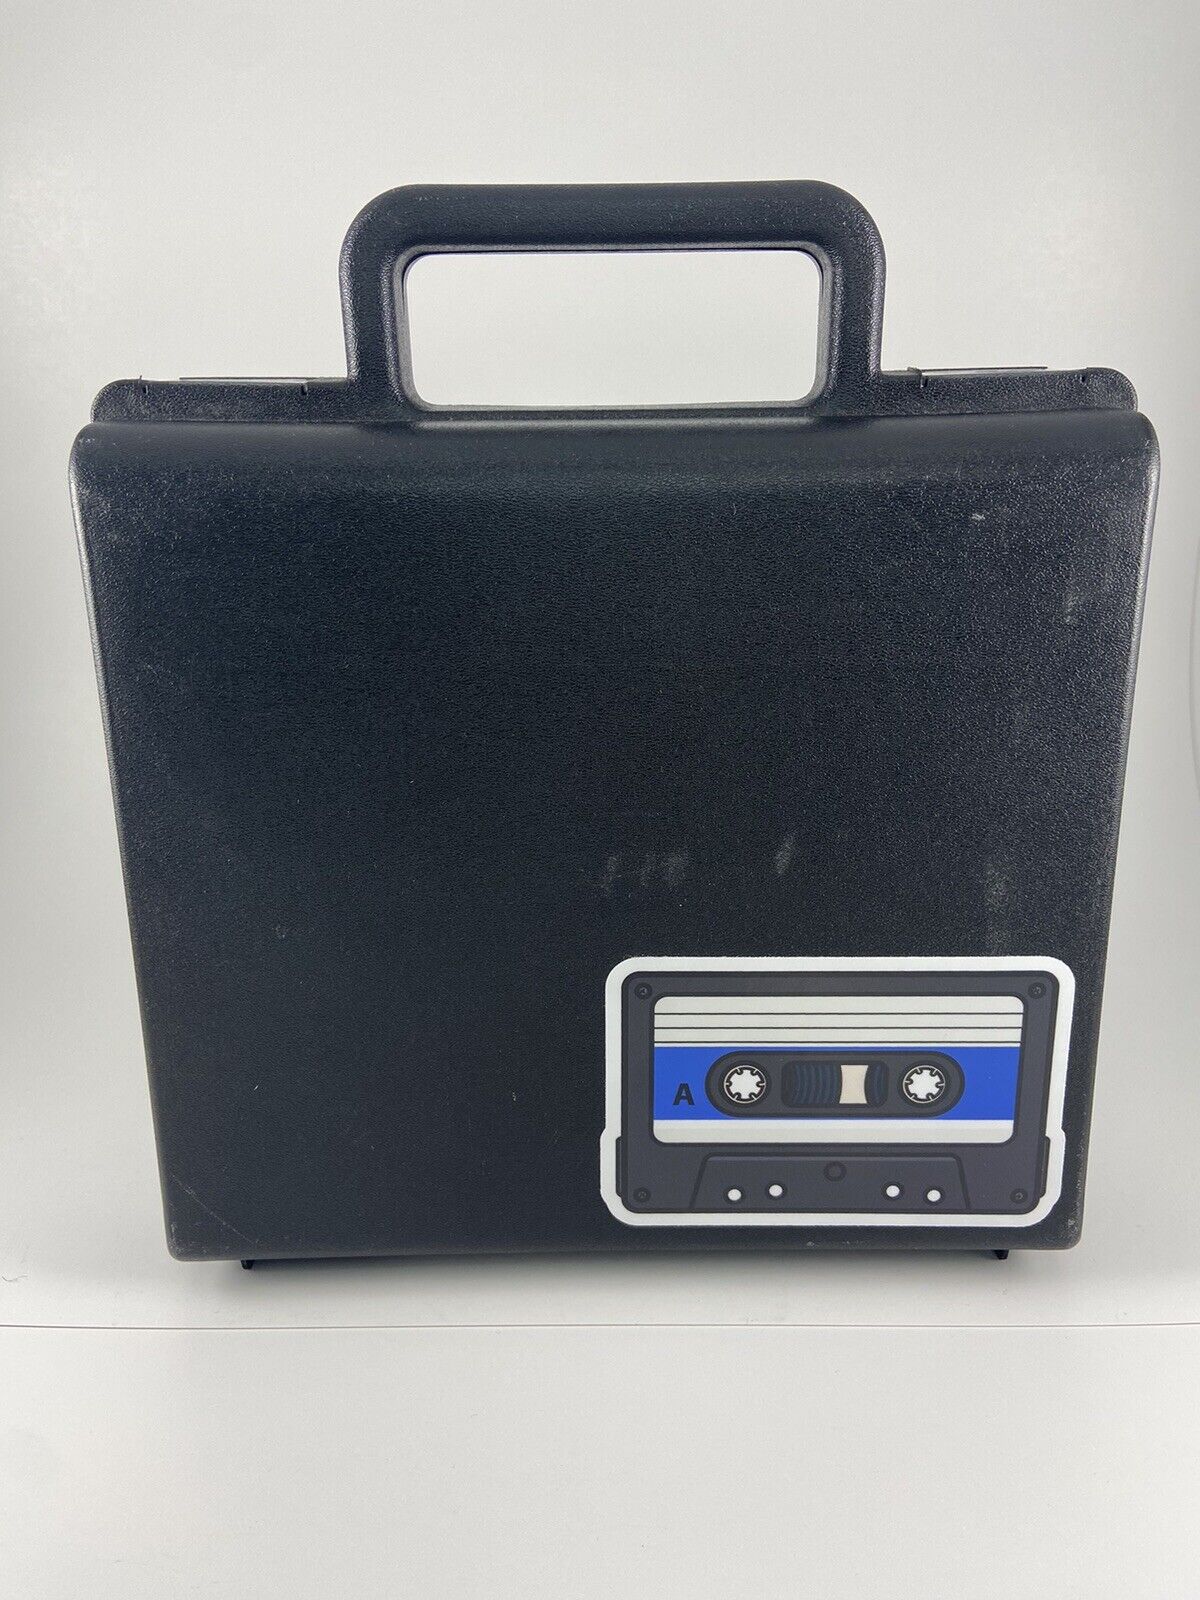 Vintage Clik Case Plastic Cassette Storage Black Carrying Case Holds 20 Tapes